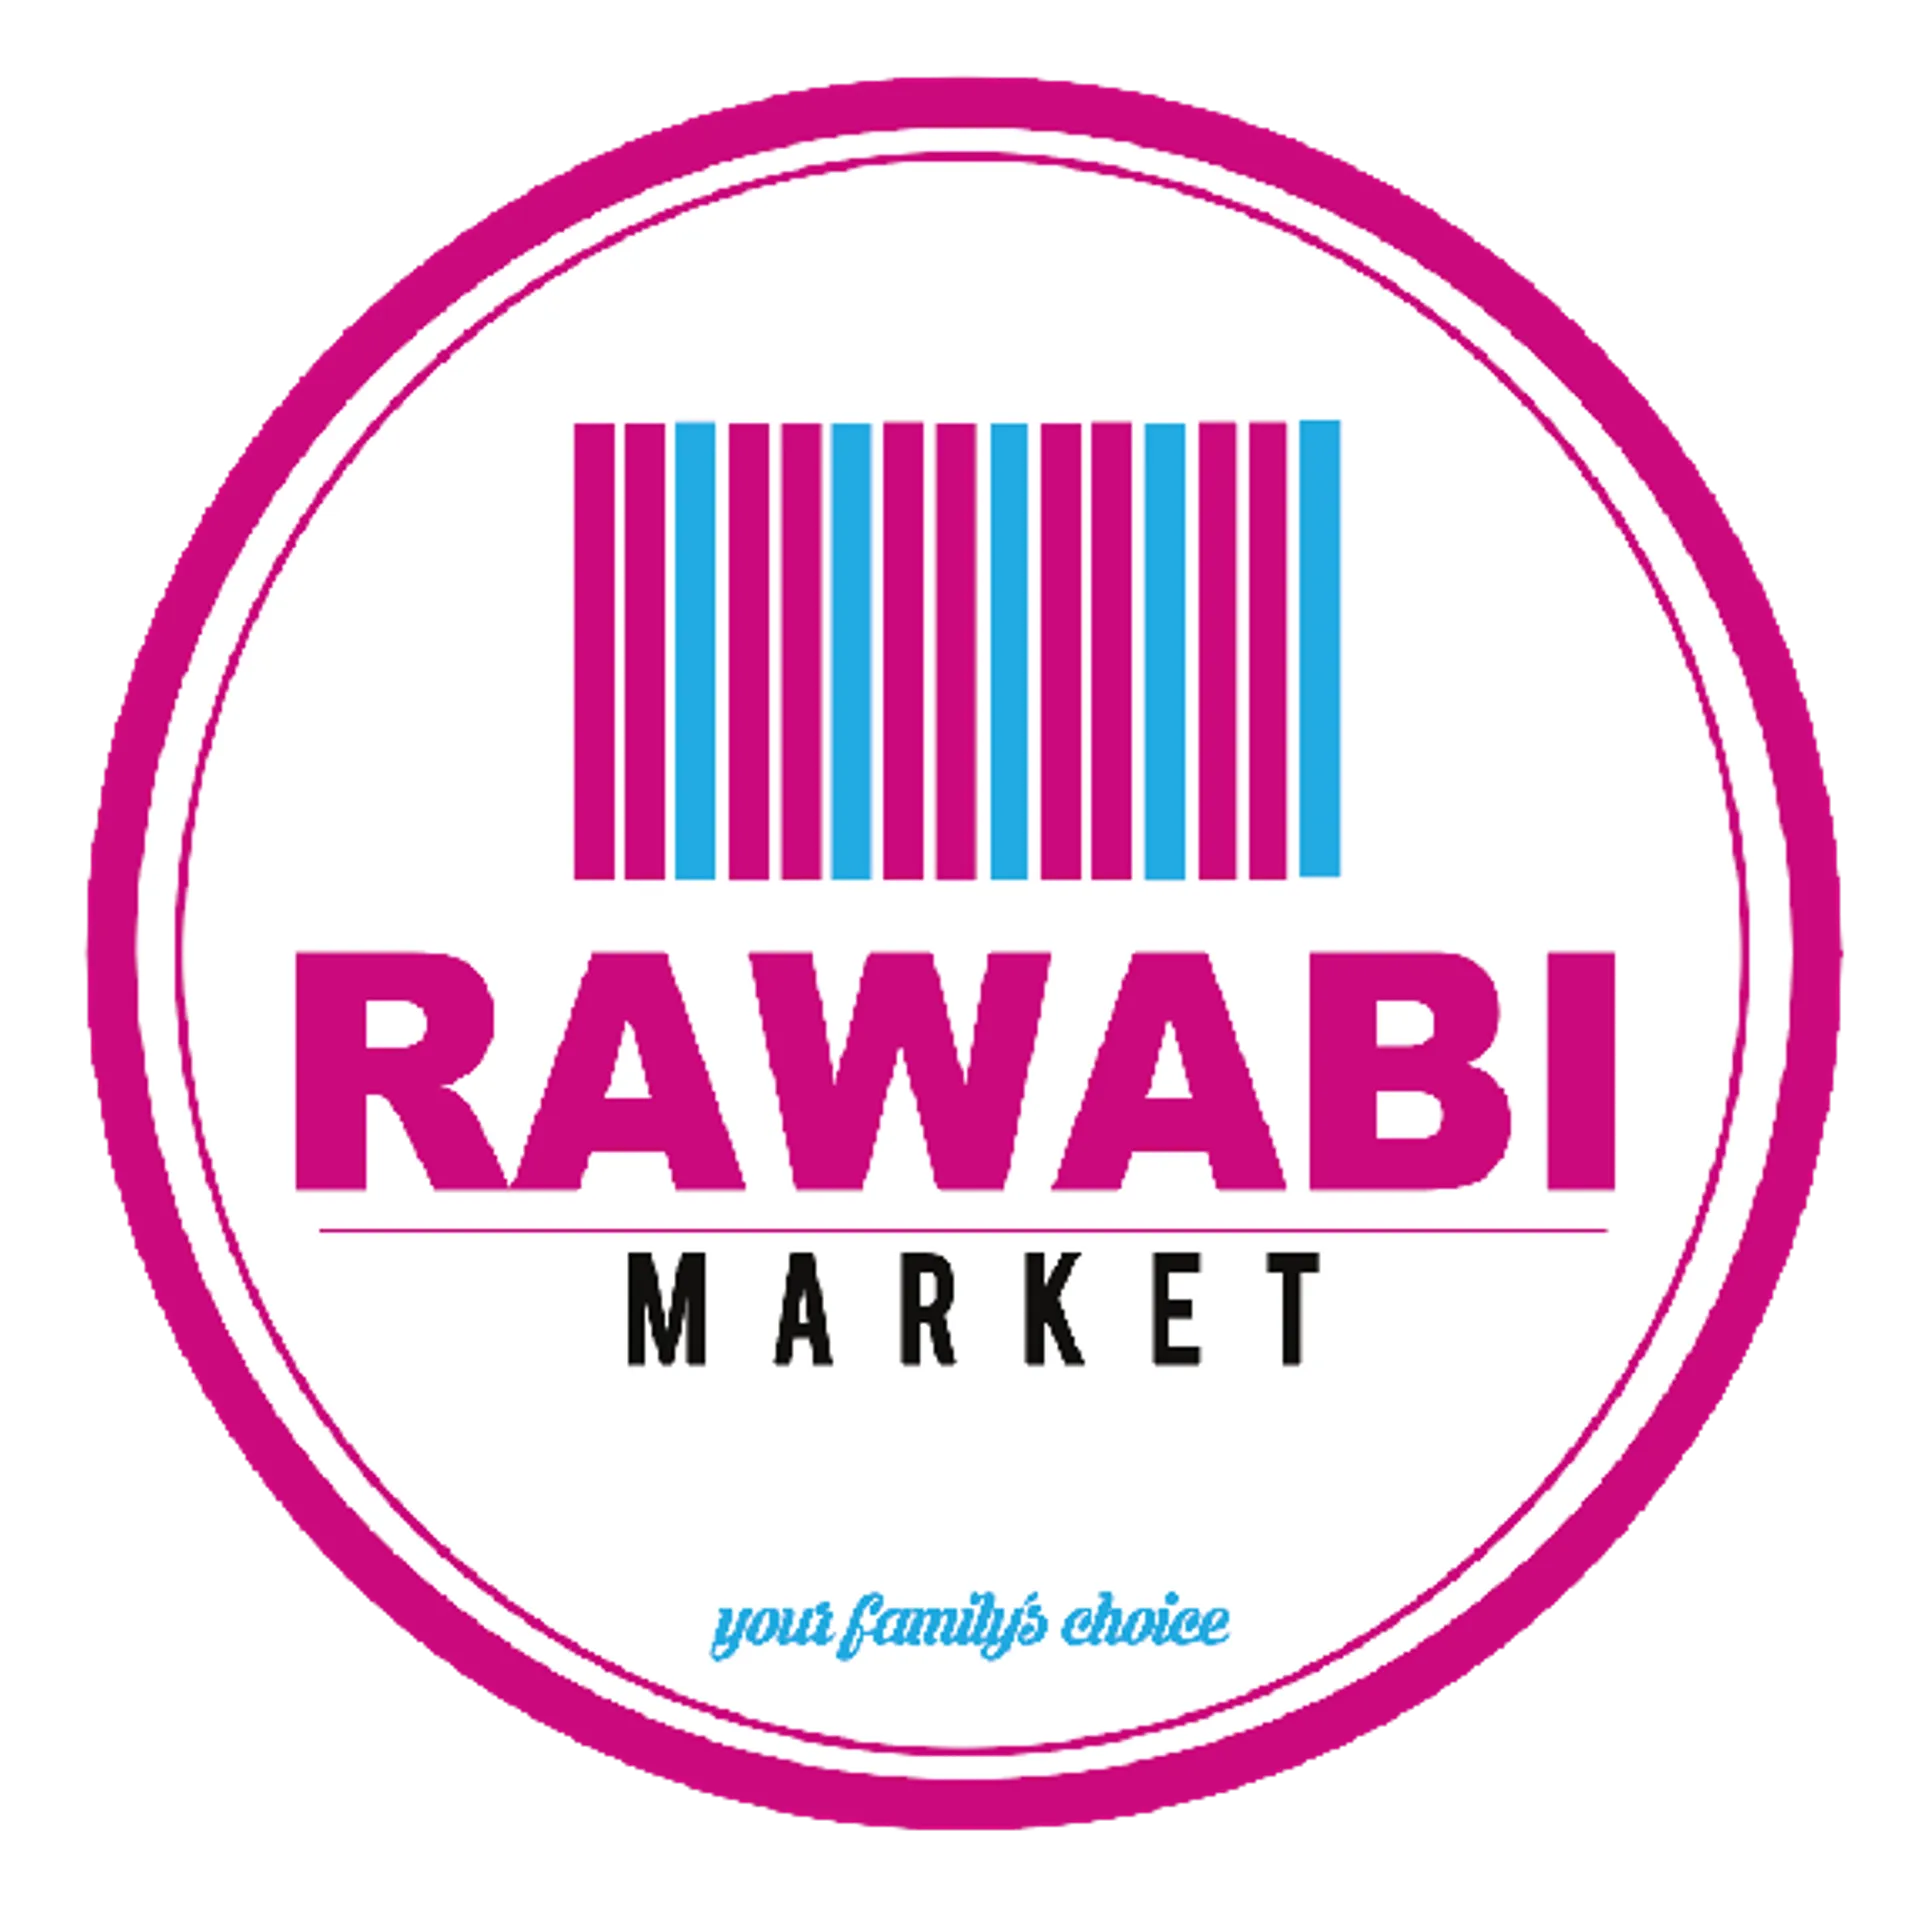 RAWABI MARKET logo. Current catalogue